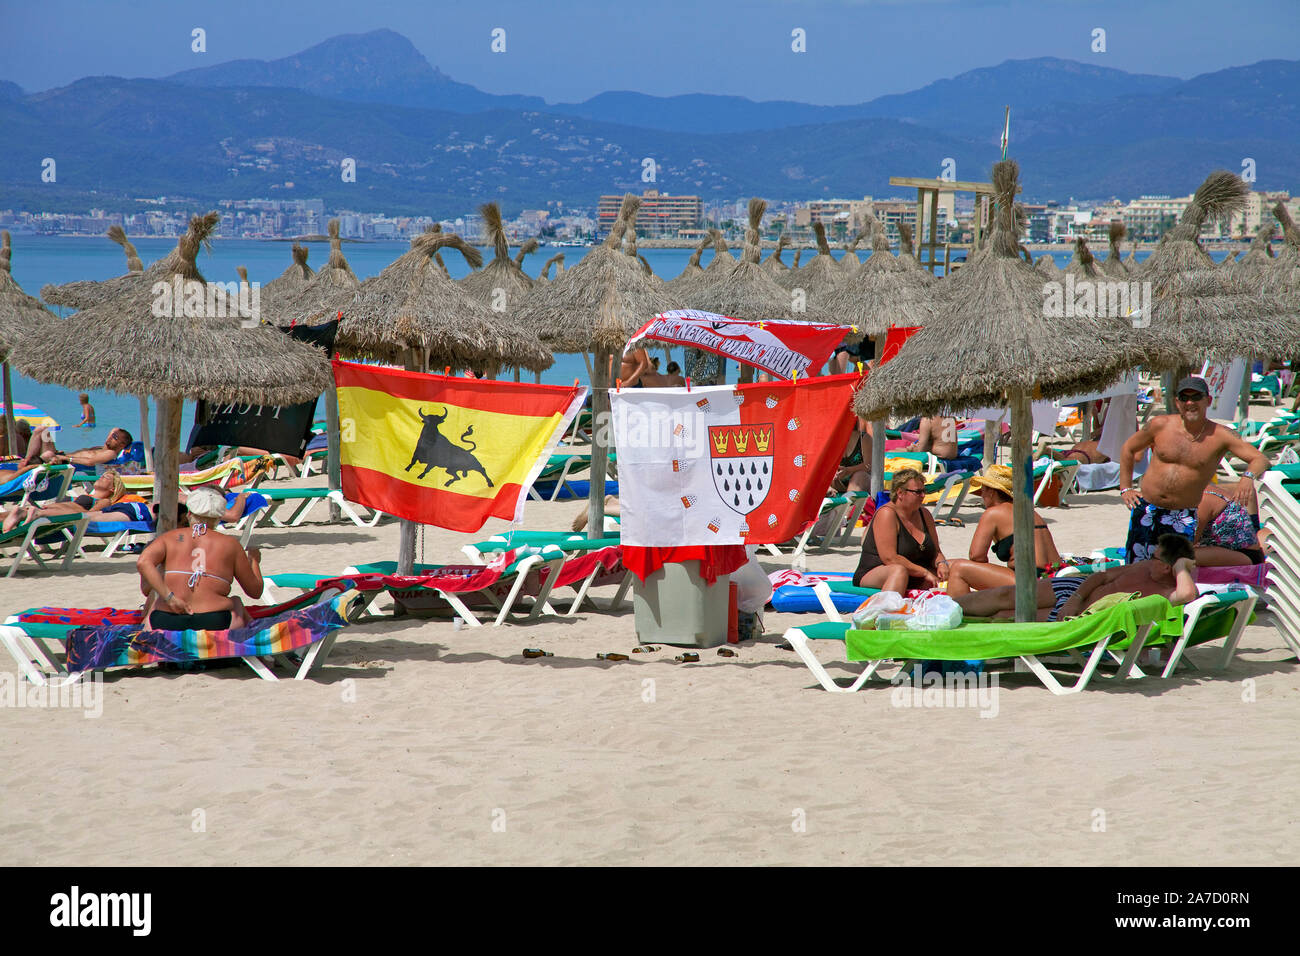 Le persone in spiaggia Ballermann, Playa de Palma, El Arenal, Maiorca, isole Baleari, Spagna Foto Stock